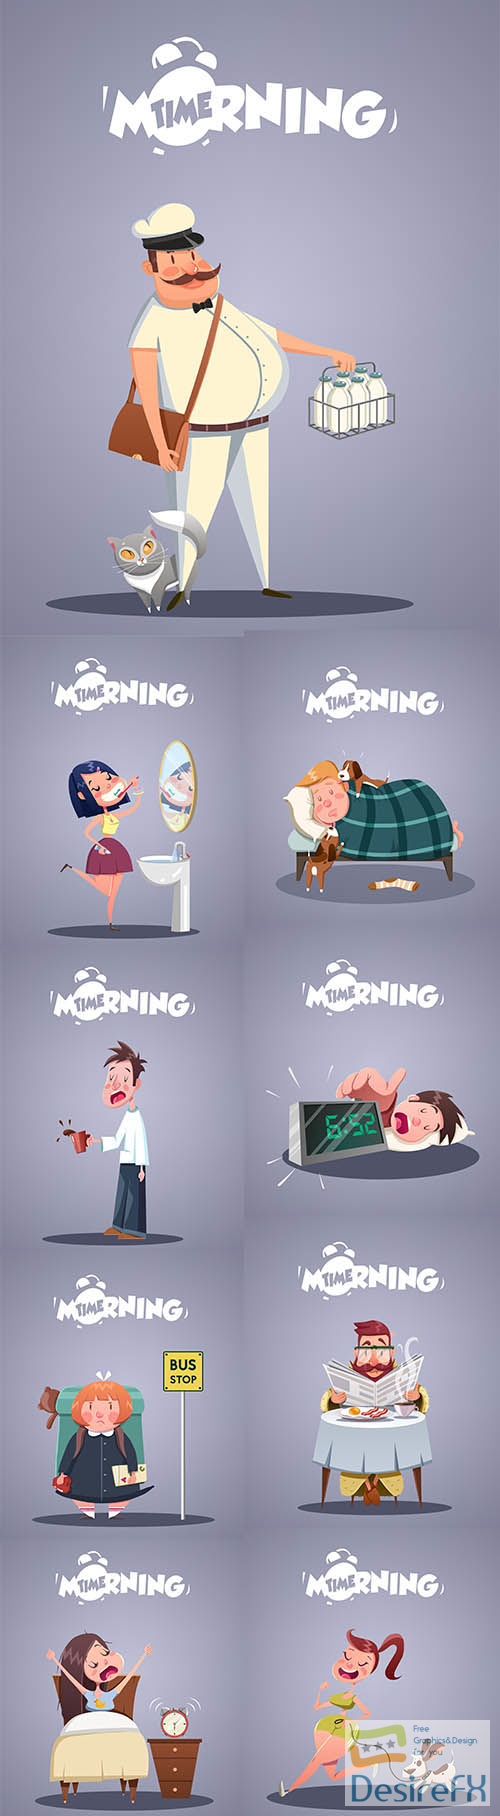 Daily morning life vector illustration